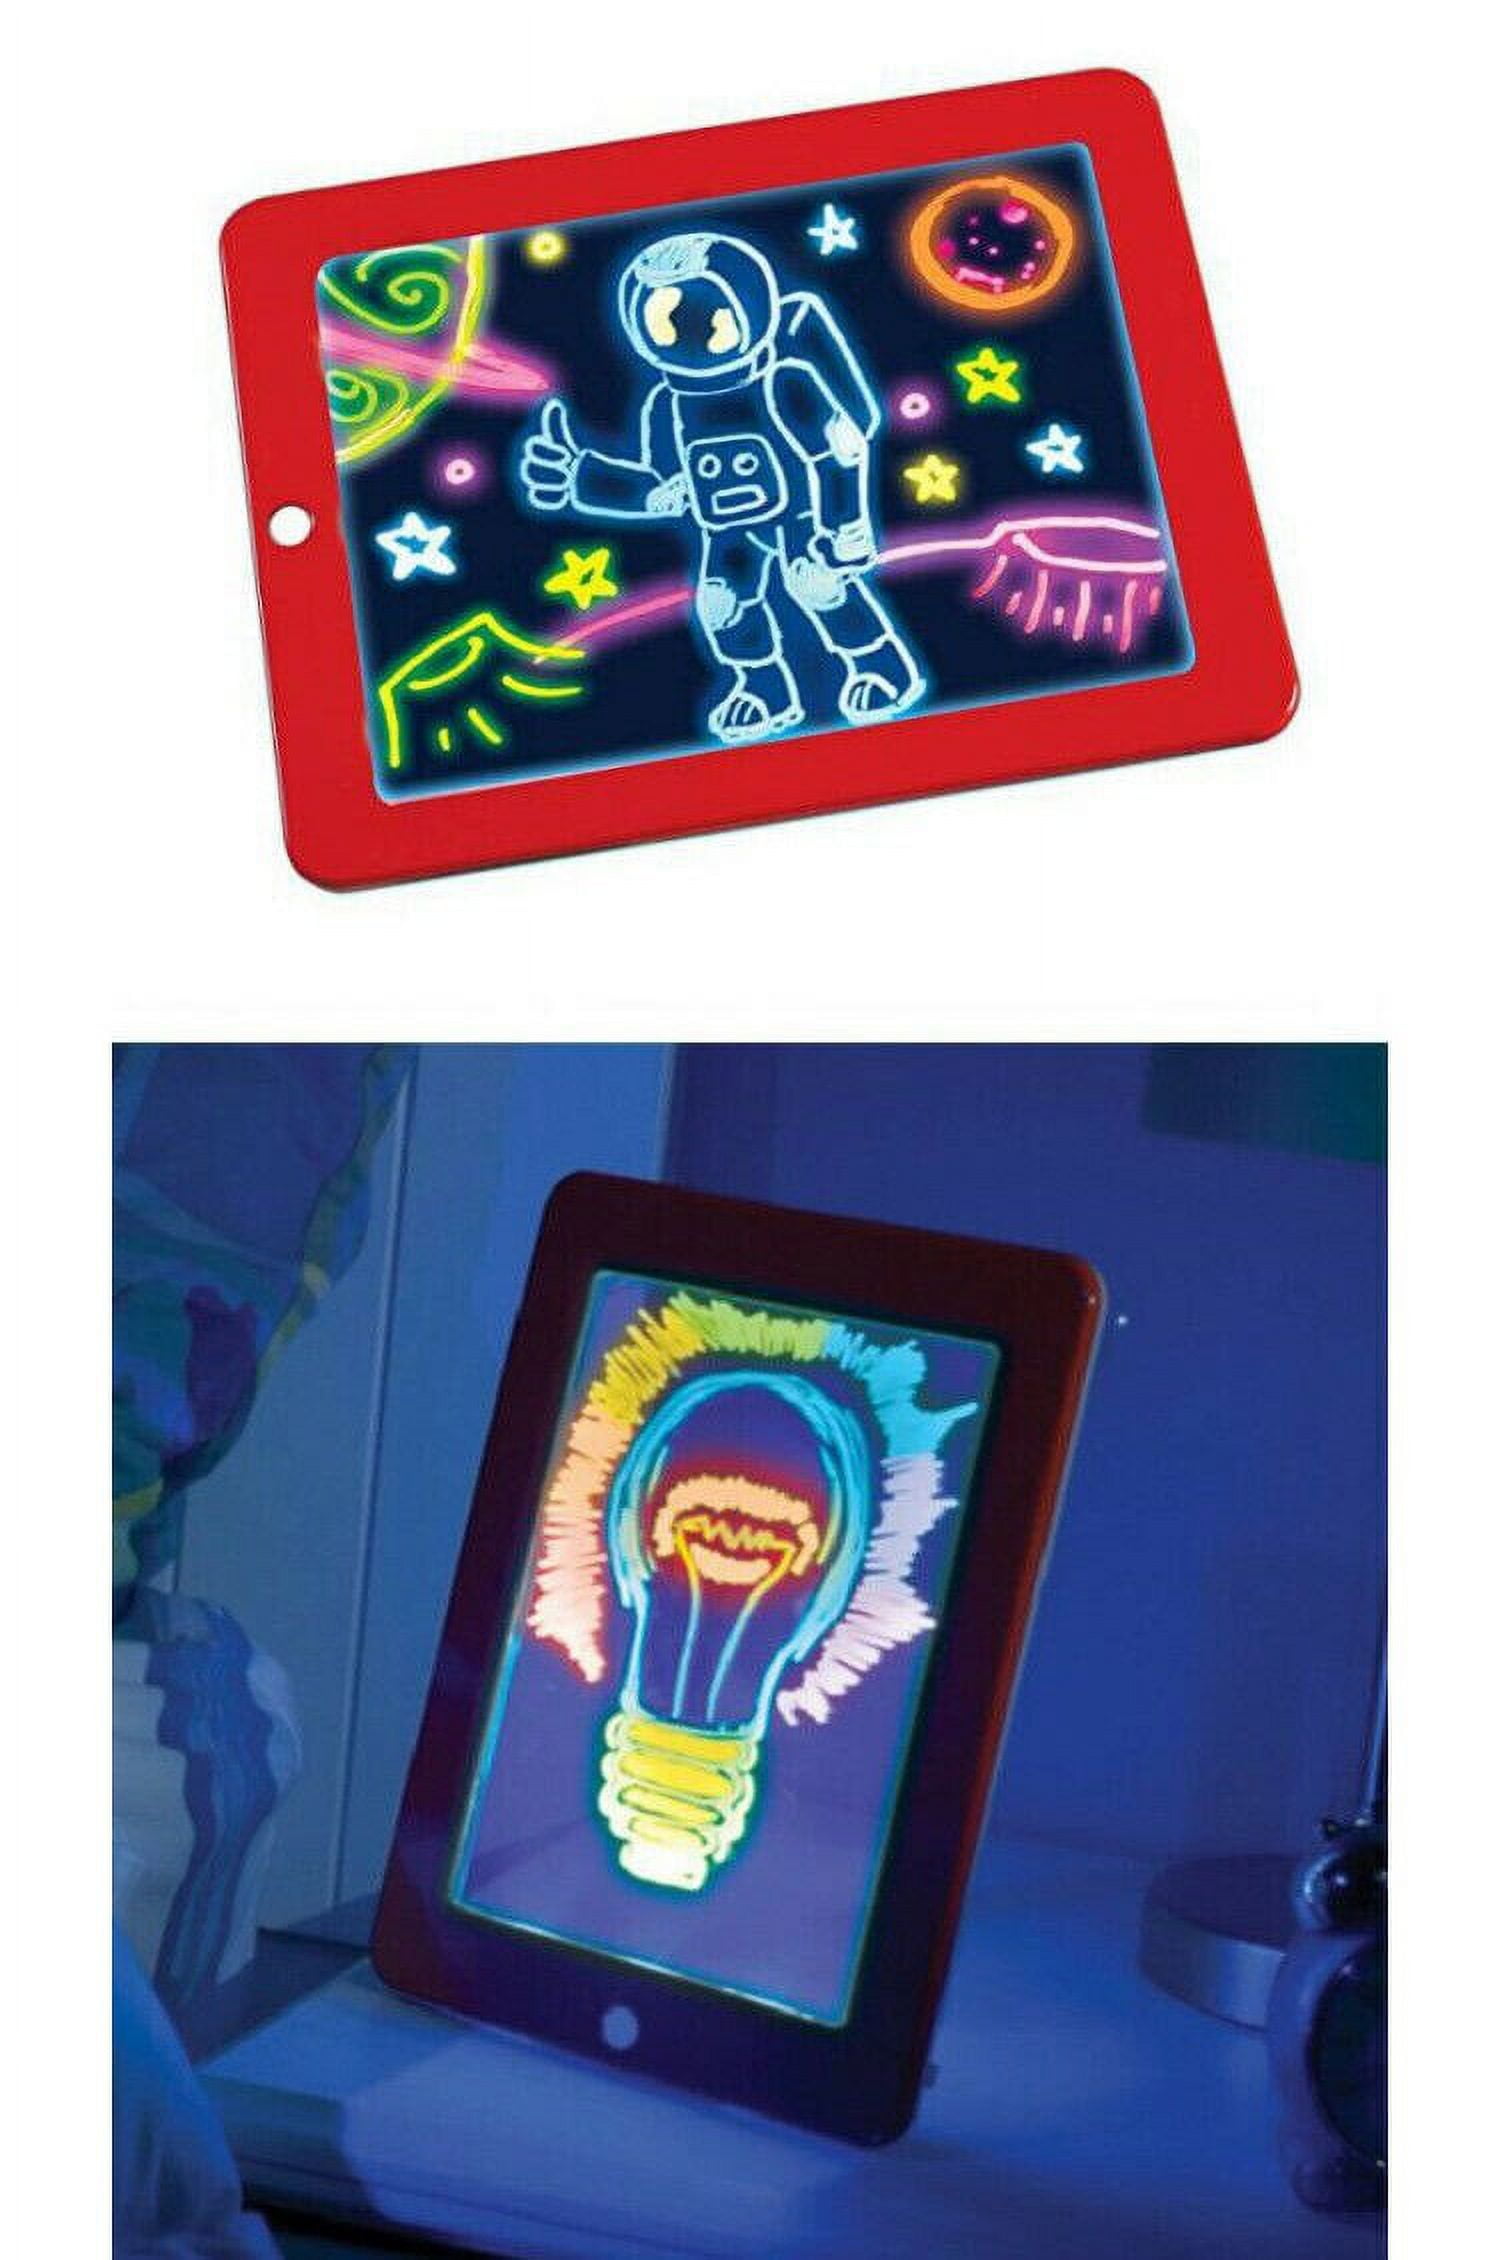 OLIPIZ ENTERPRISE Magic Sketch Drawing Pad, Light Up LED Glow Board, Draw, Sketch, Create, Doodle, Art, Write, Learning Tablet